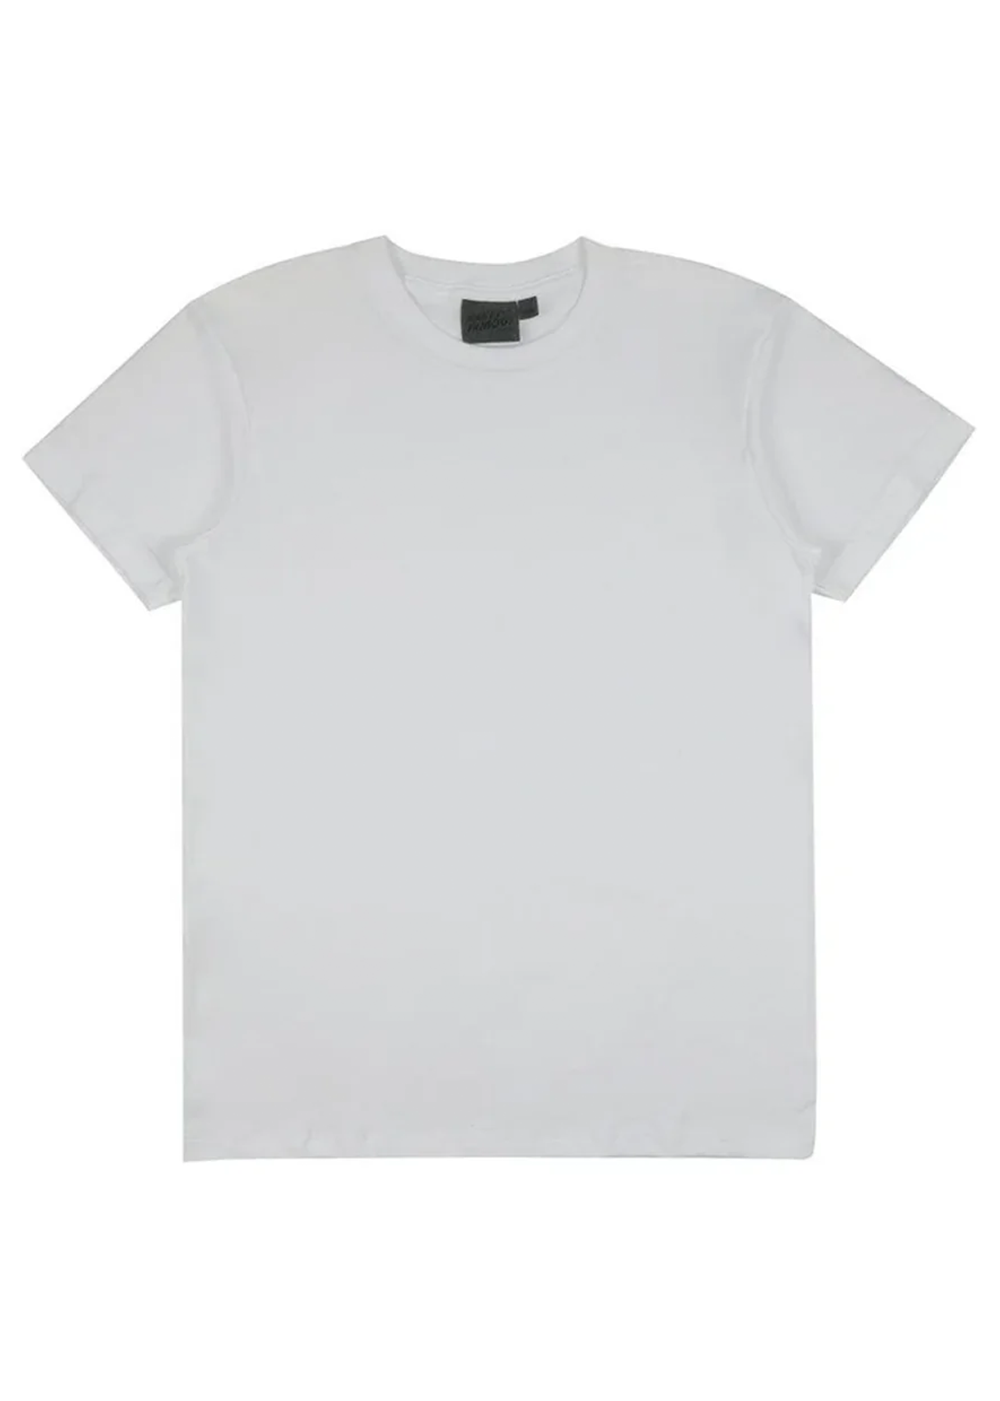 Circular Knit T-Shirt